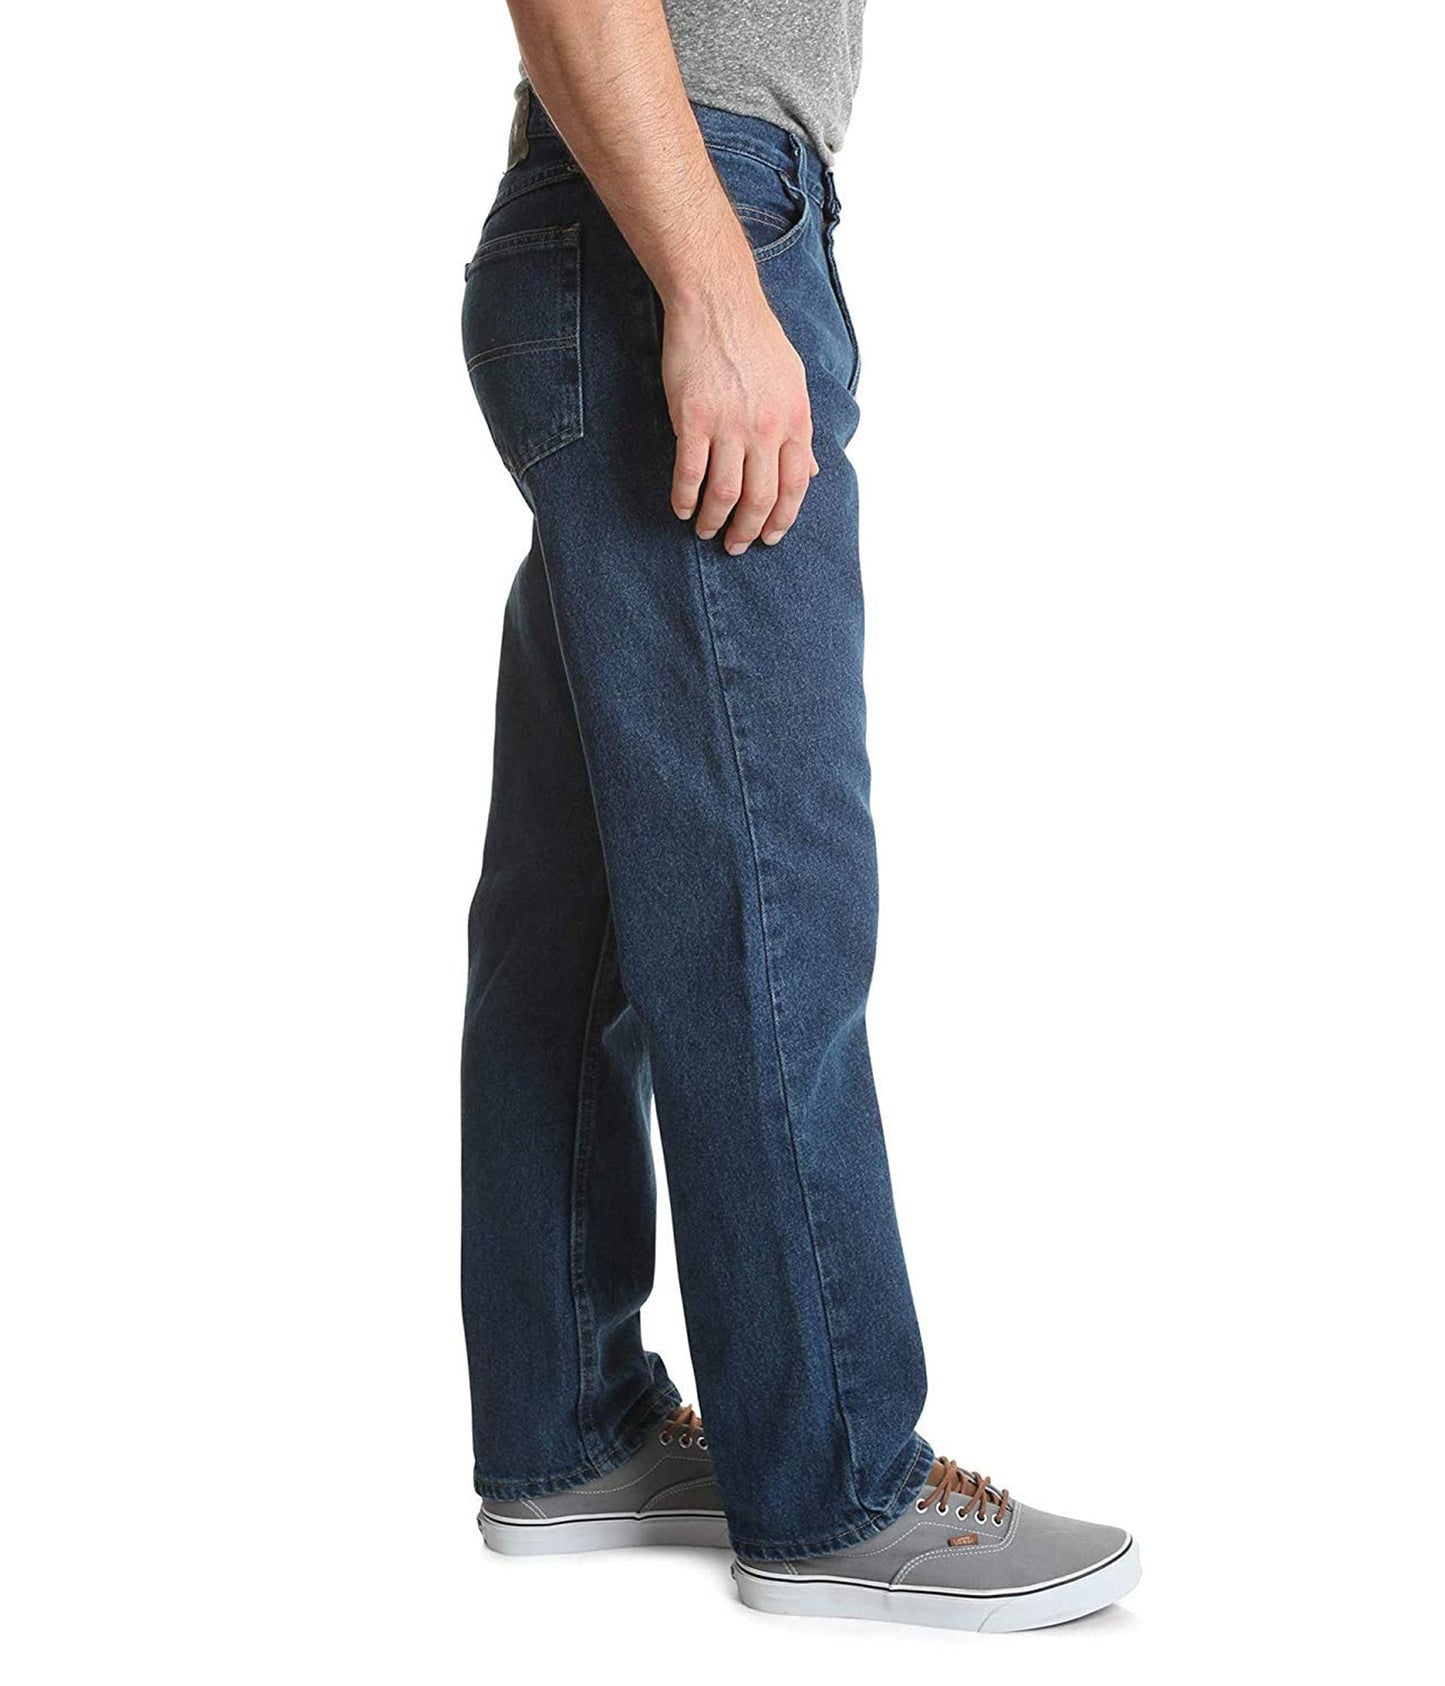 Wrangler Authentics Men's Classic 5-Pocket Relaxed Fit Cotton Jean, Dark Stonewash, 40W x 30L